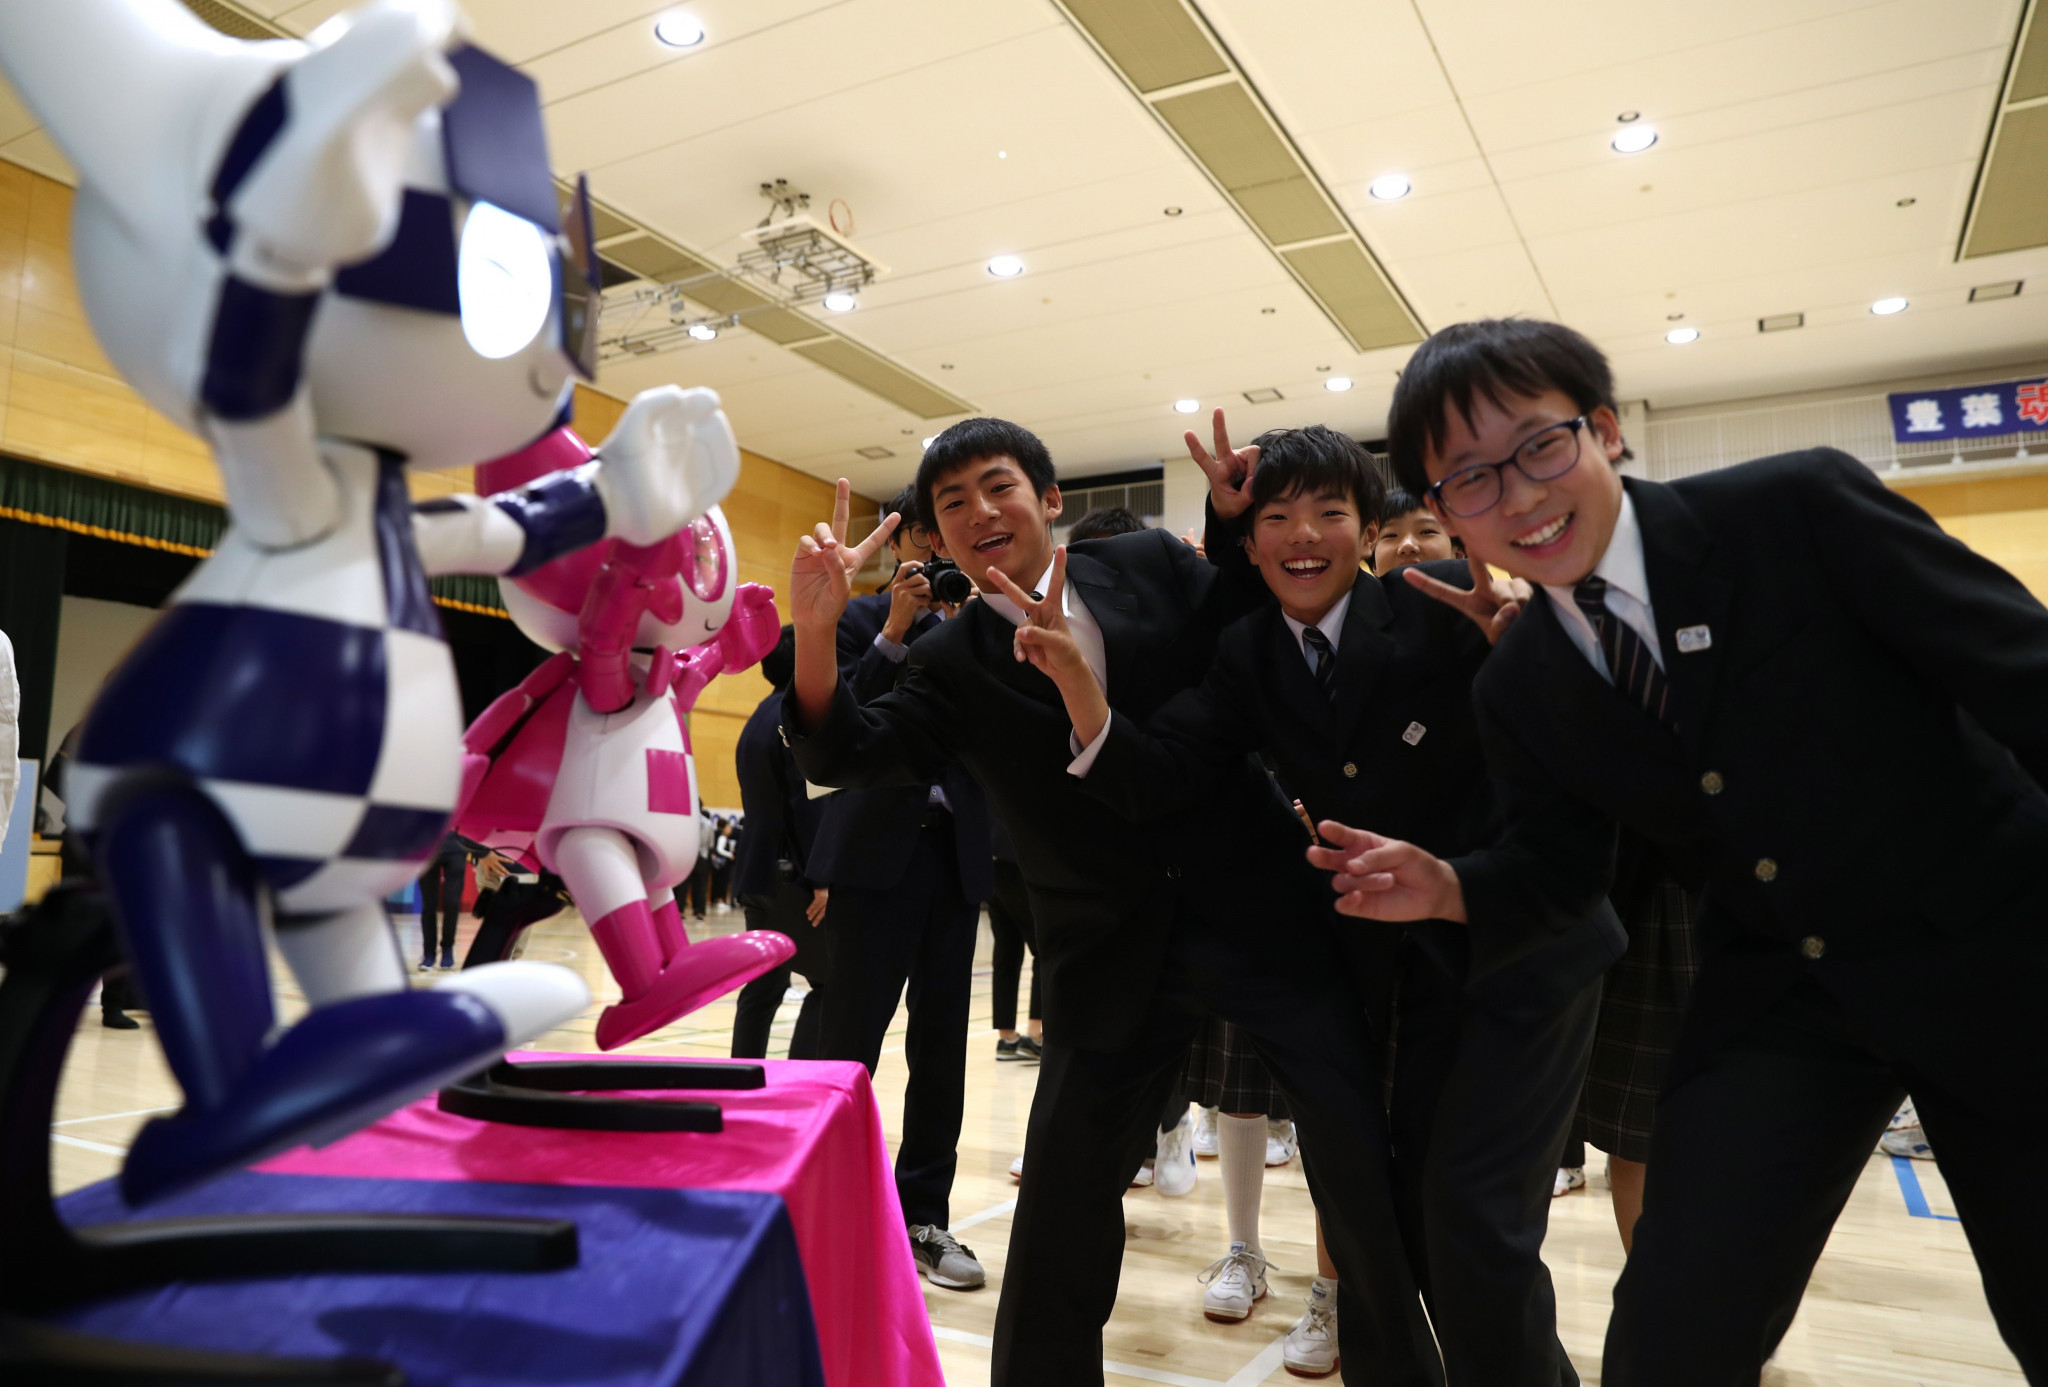 About 130,000 schoolchildren set to attend Tokyo 2020 Paralympics despite COVID-19 concerns